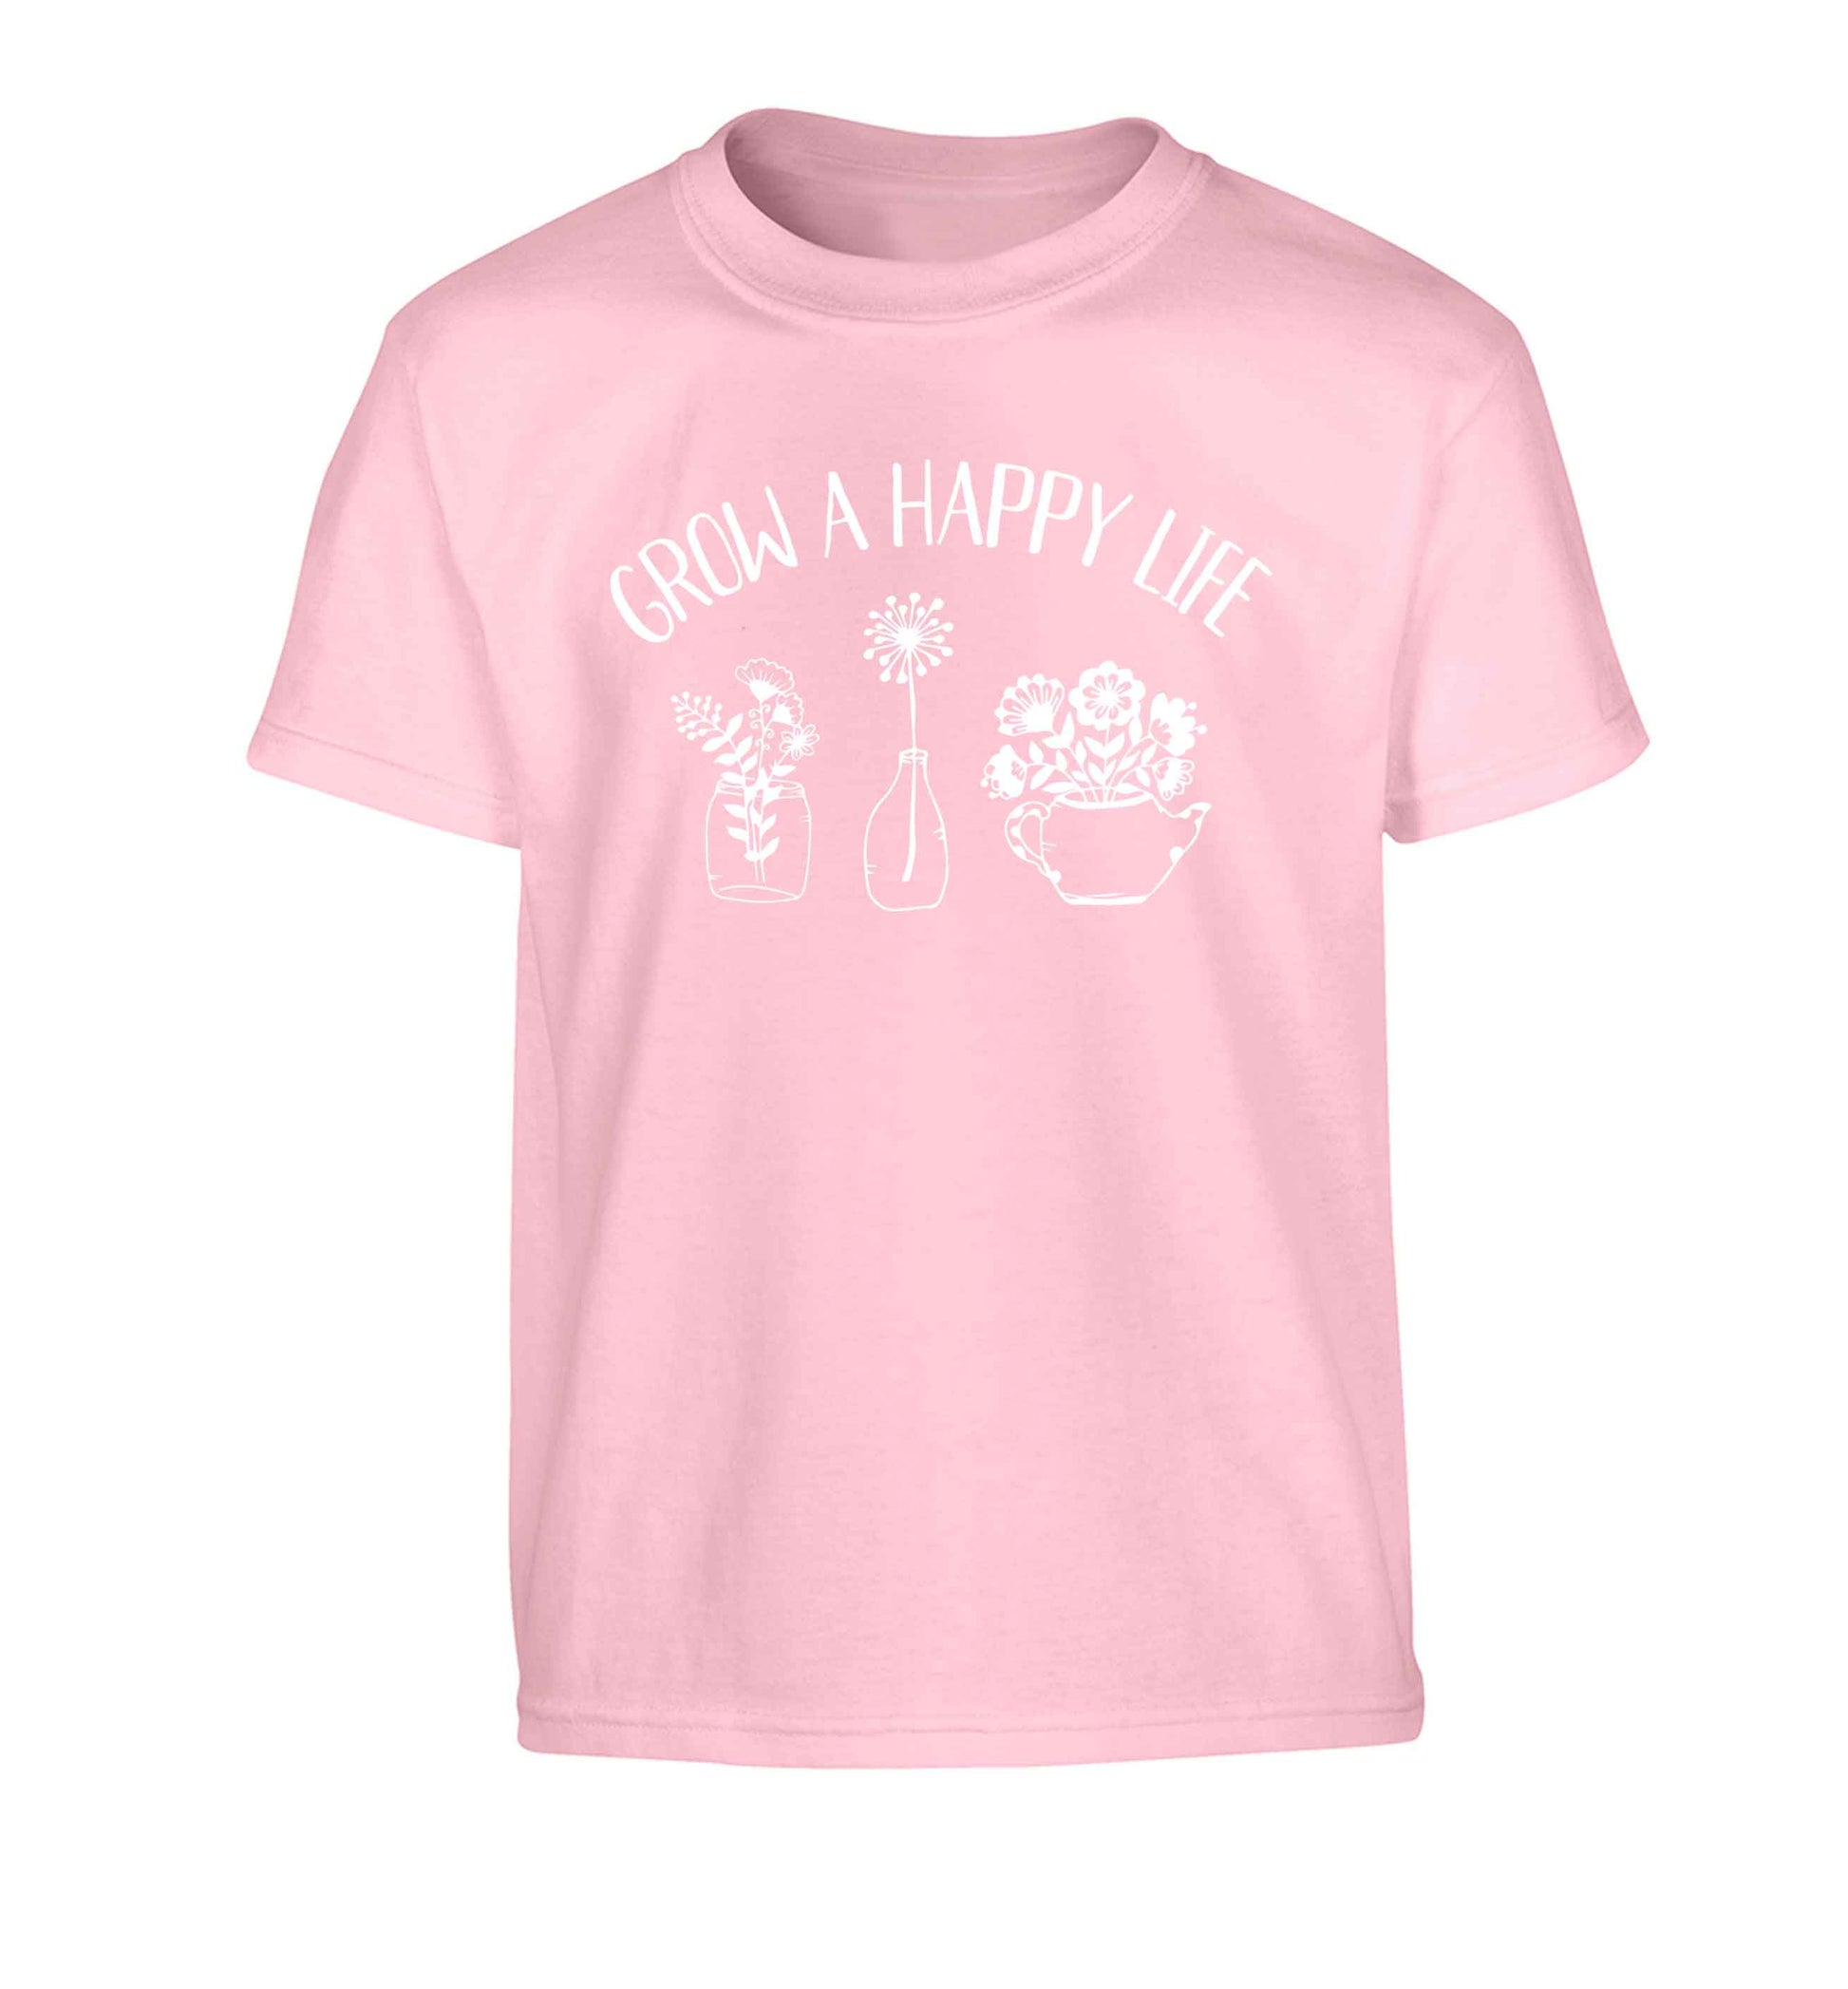 Grow a happy life Children's light pink Tshirt 12-13 Years